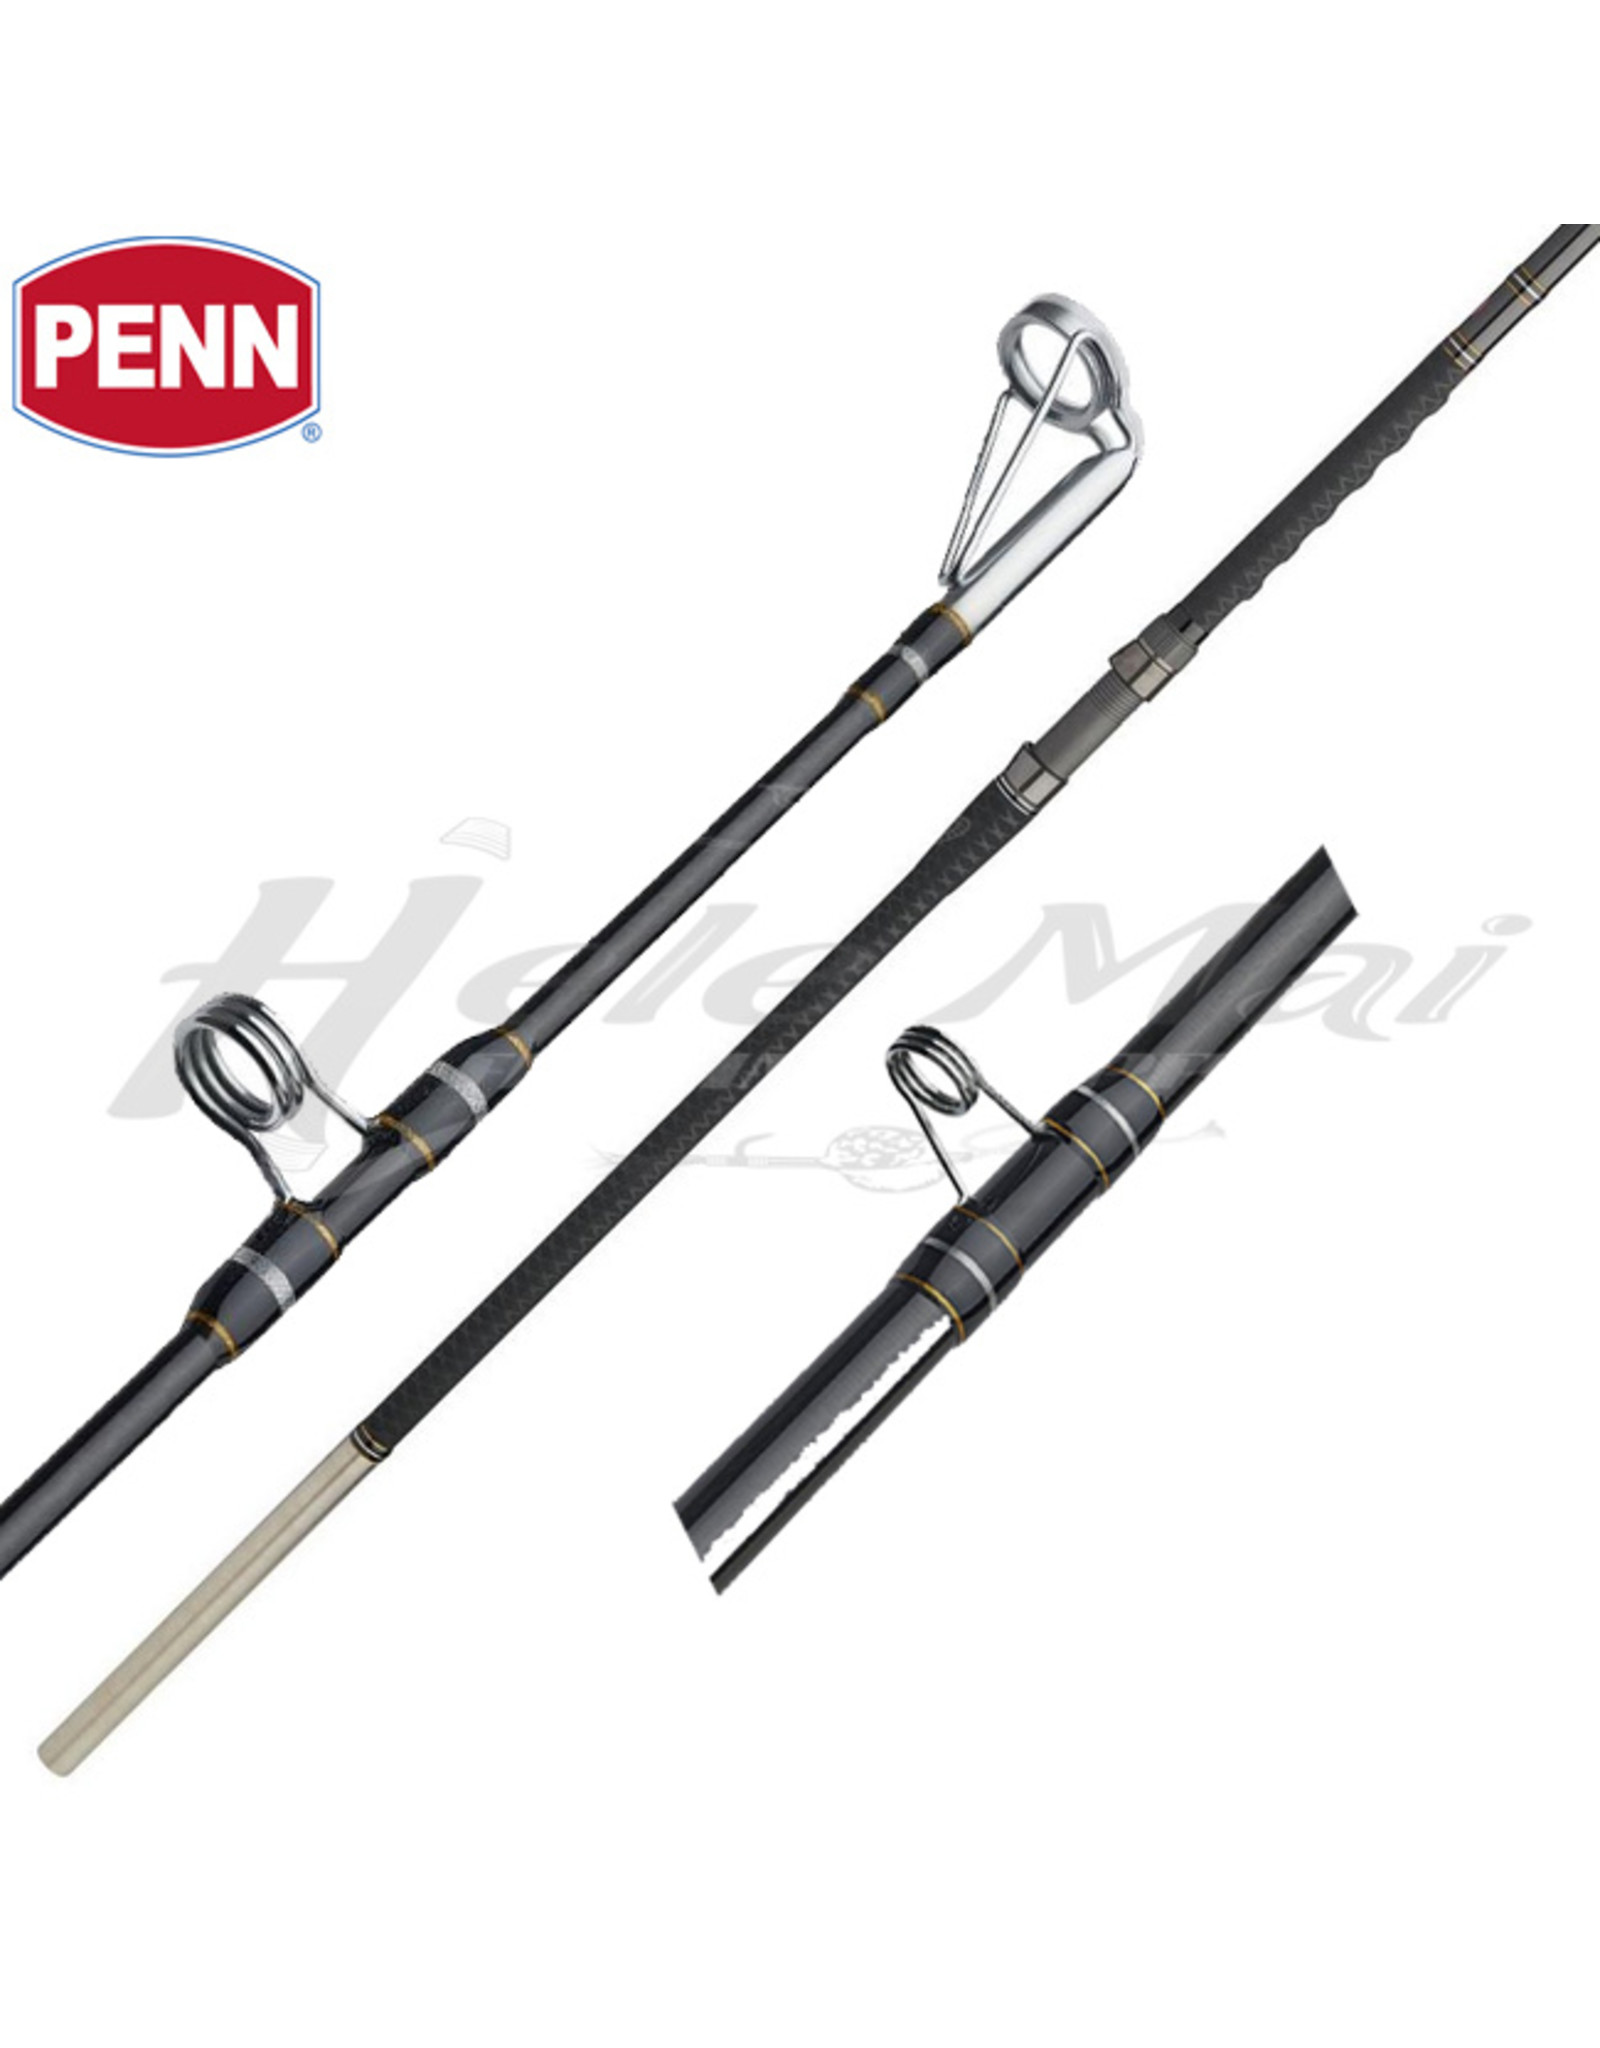 Penn Fishing Tackle, Penn Rods, Penn Reels